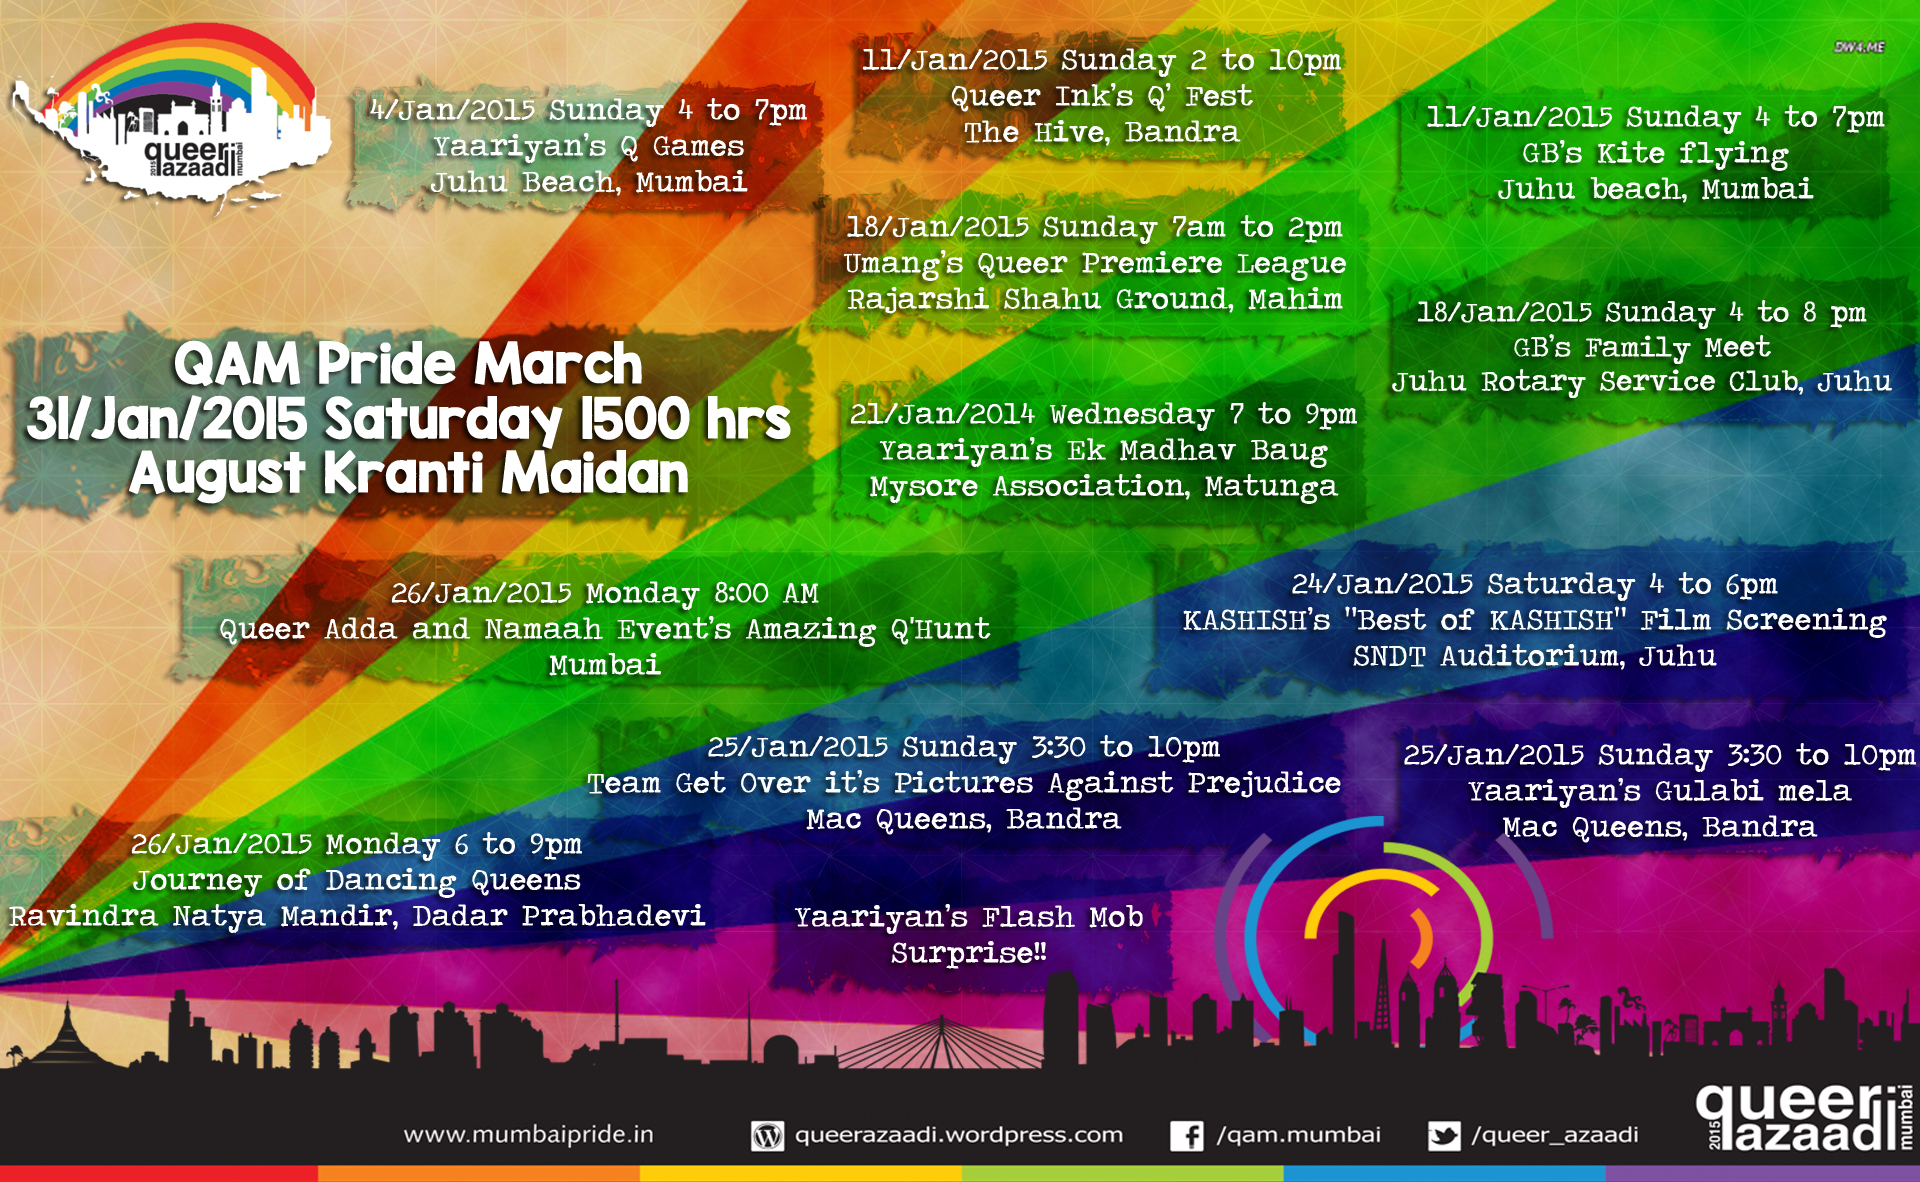 Queer Azaadi Mumbai 2015 Calendar Is Out!